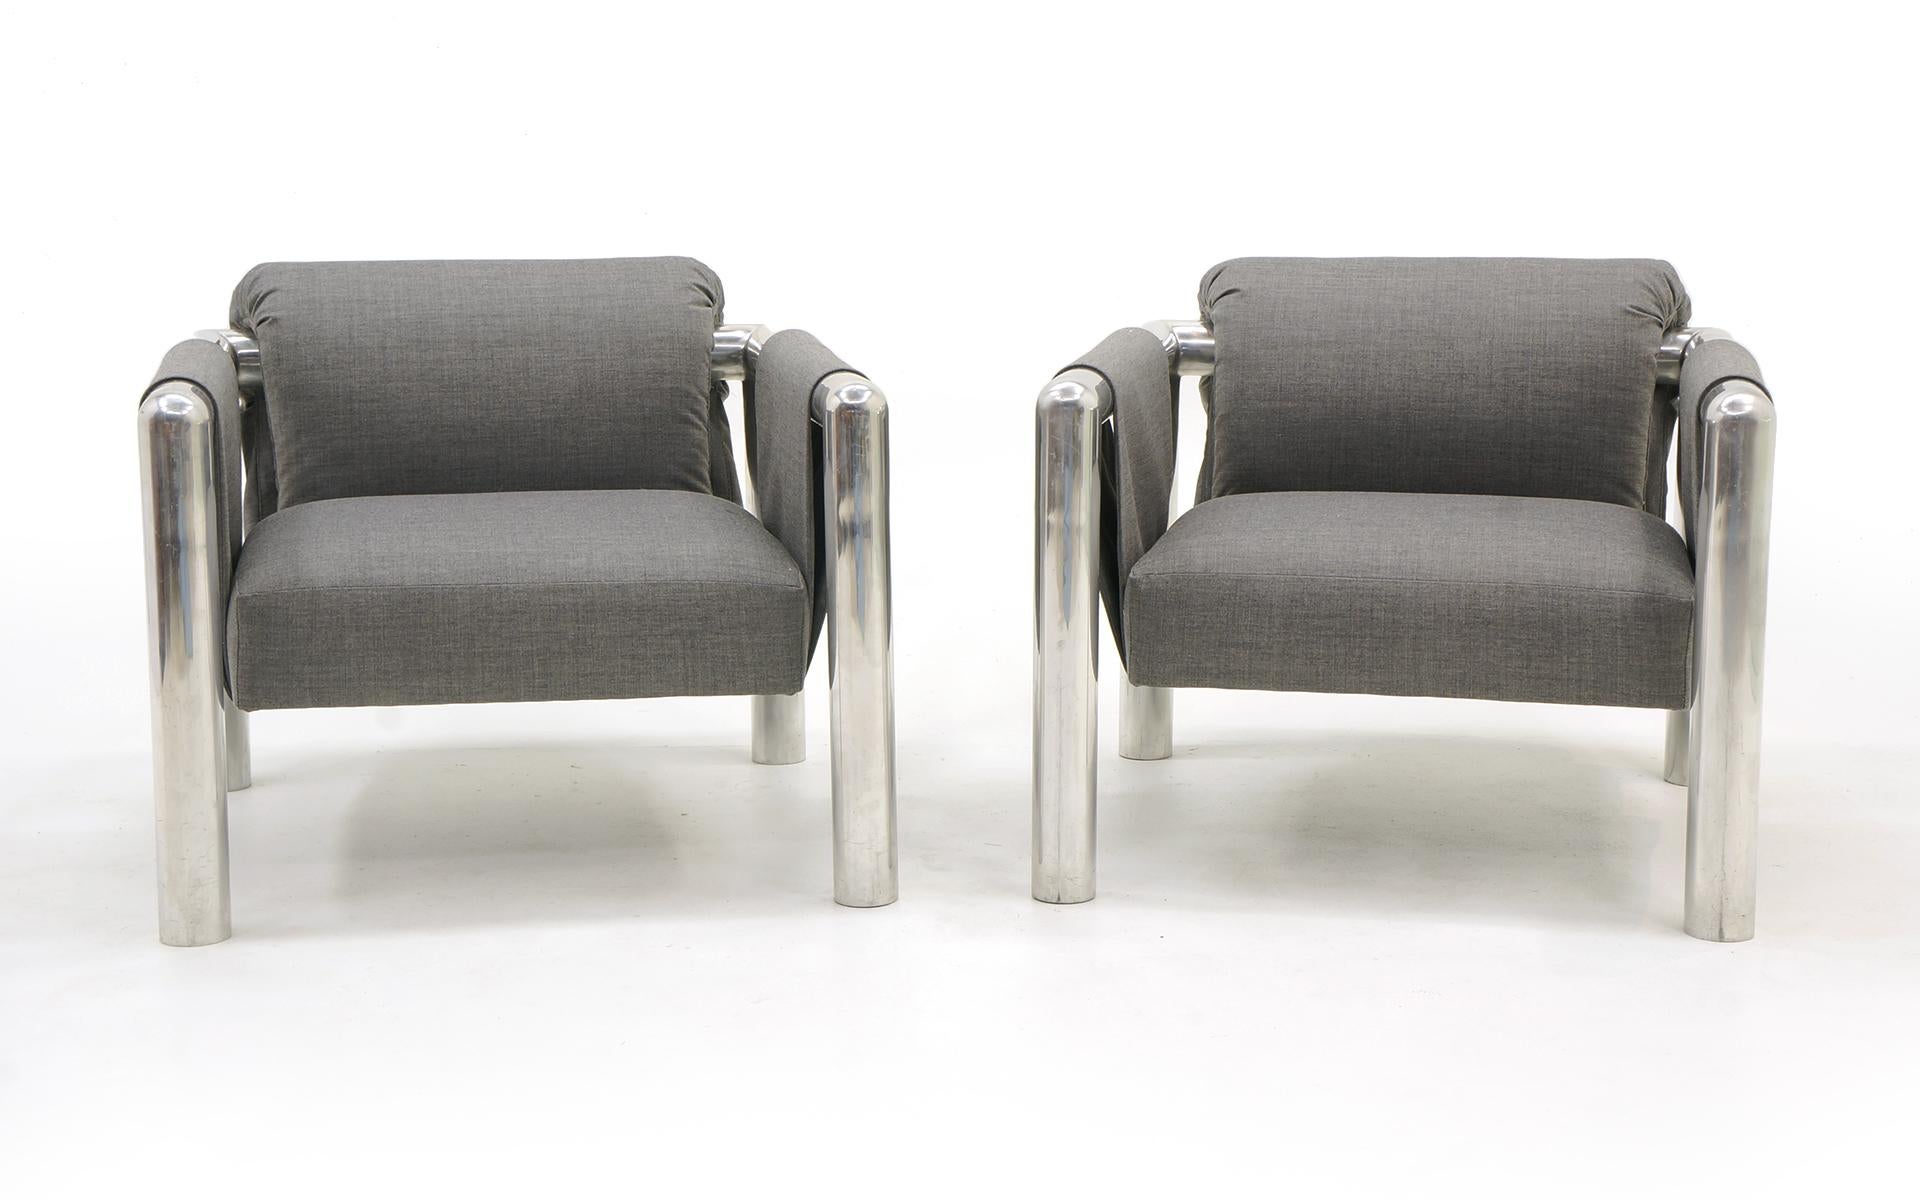 Pair of John Mascheroni lounge chairs. Large tubular aluminum frames and expertly reupholstered in a medium gray Maharam fabric.